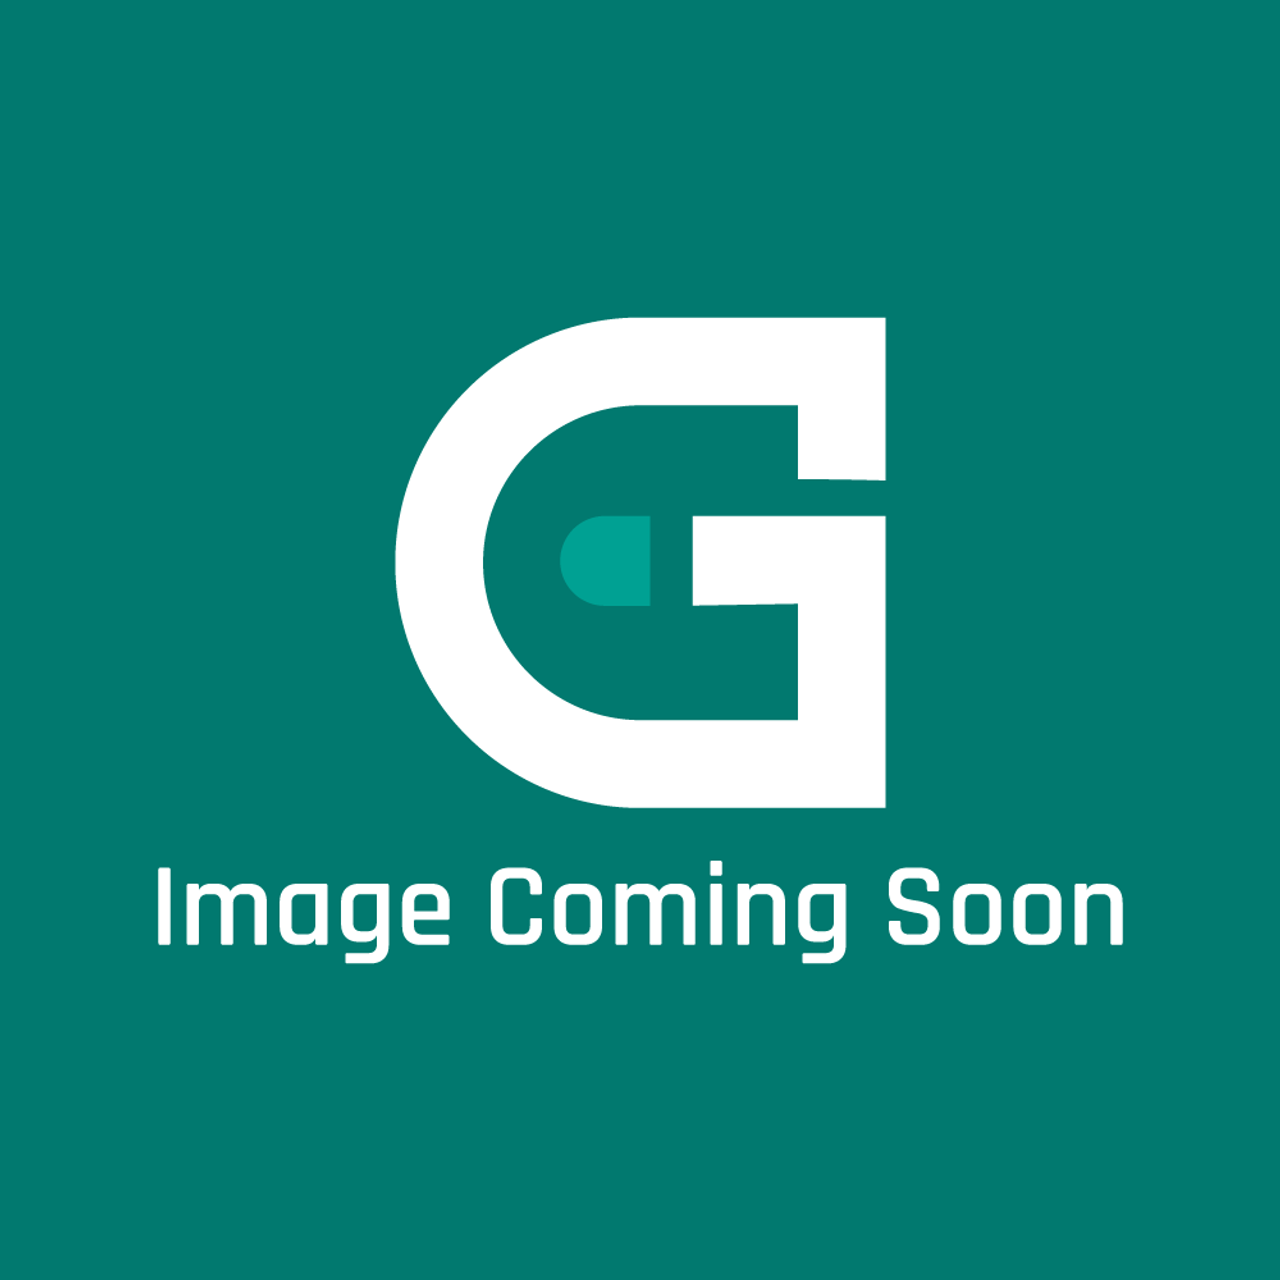 AGA Marvel RS4F999070 - Firebrick (No.339) Lho Rsg - Image Coming Soon!